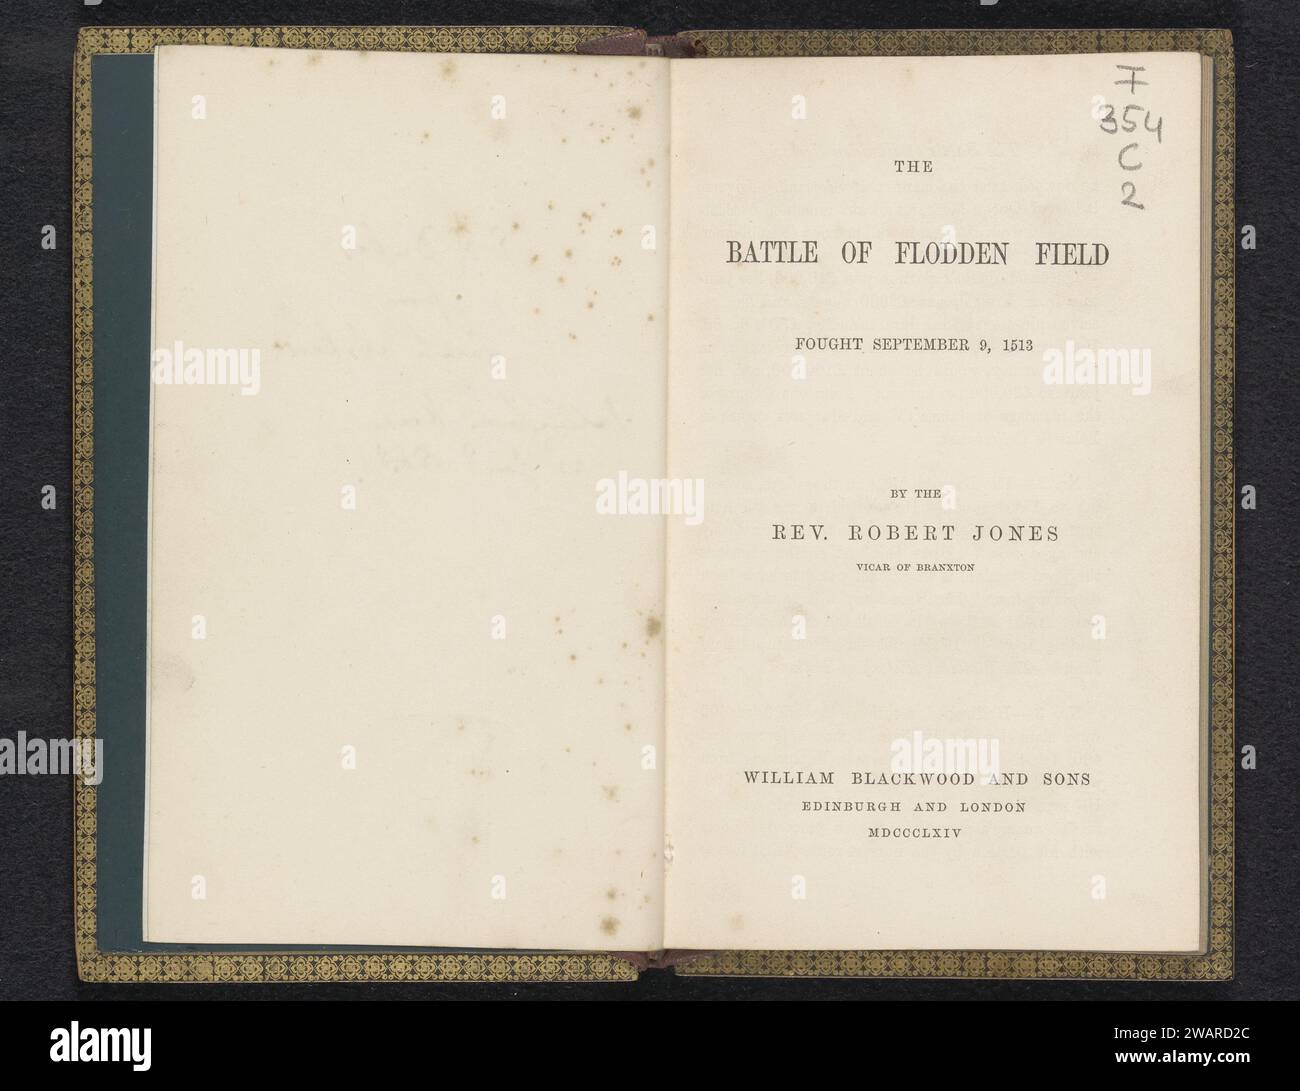 The Battle of flodden Field Fatted am 9. September 1513, Robert Jones (Dominee), 1864 Buch Edinburgh Paper. Holz (pflanzliches Material) Druck/Kollotyp Stockfoto